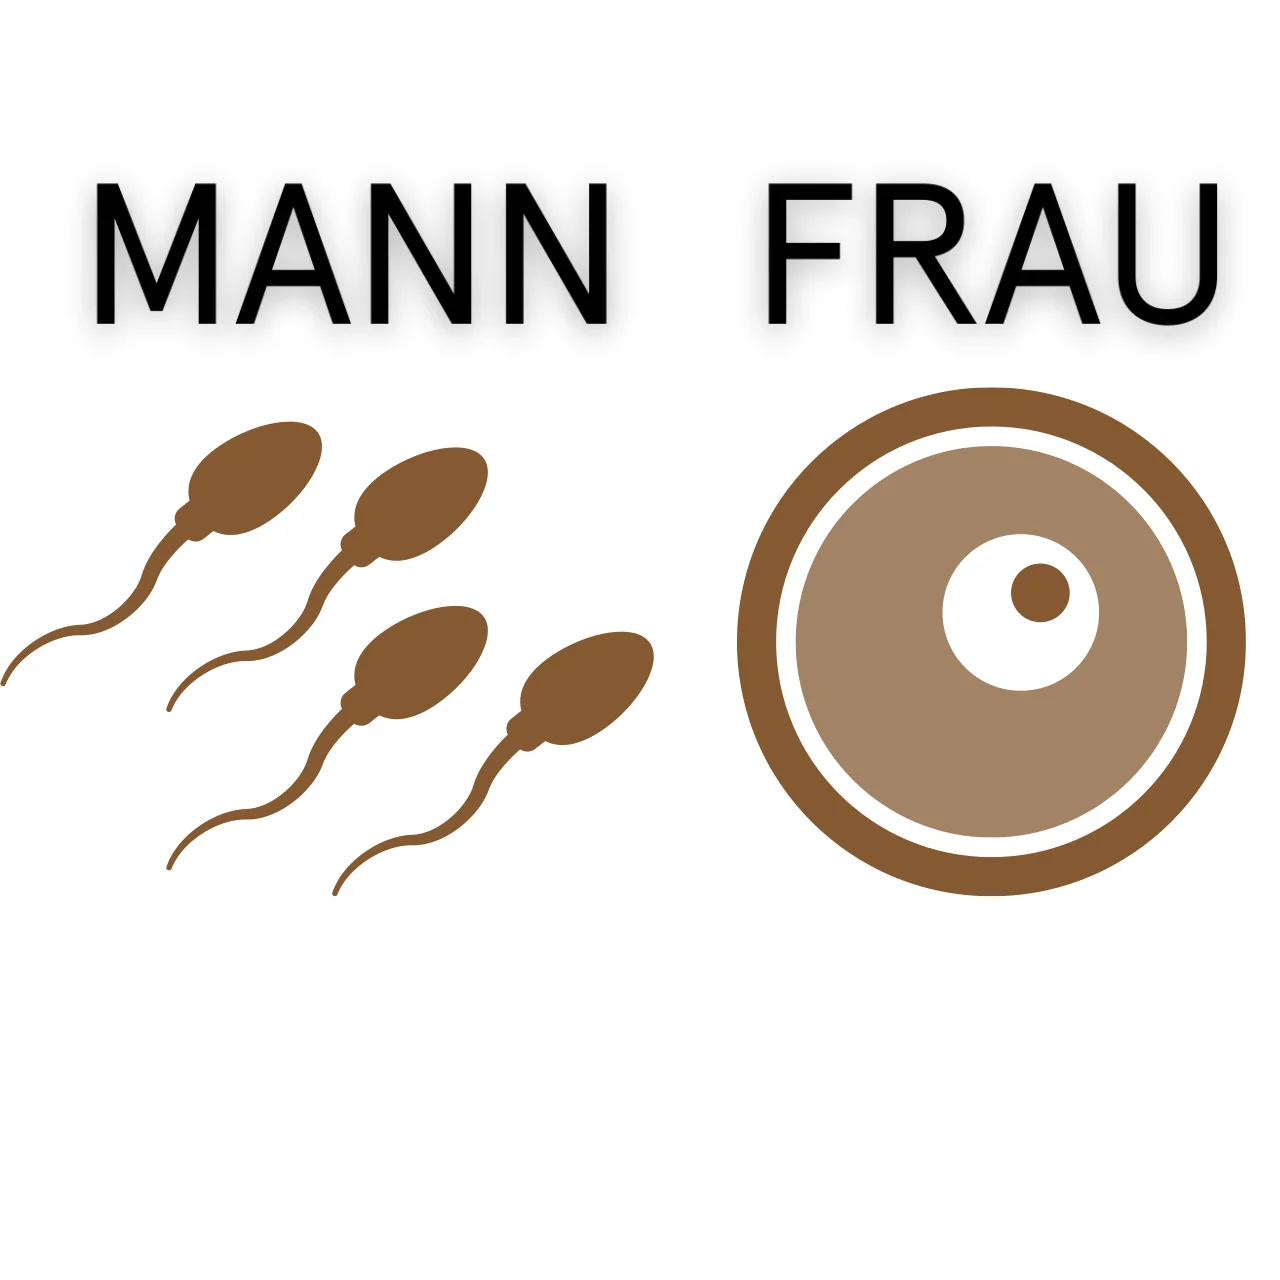 Mann / Frau